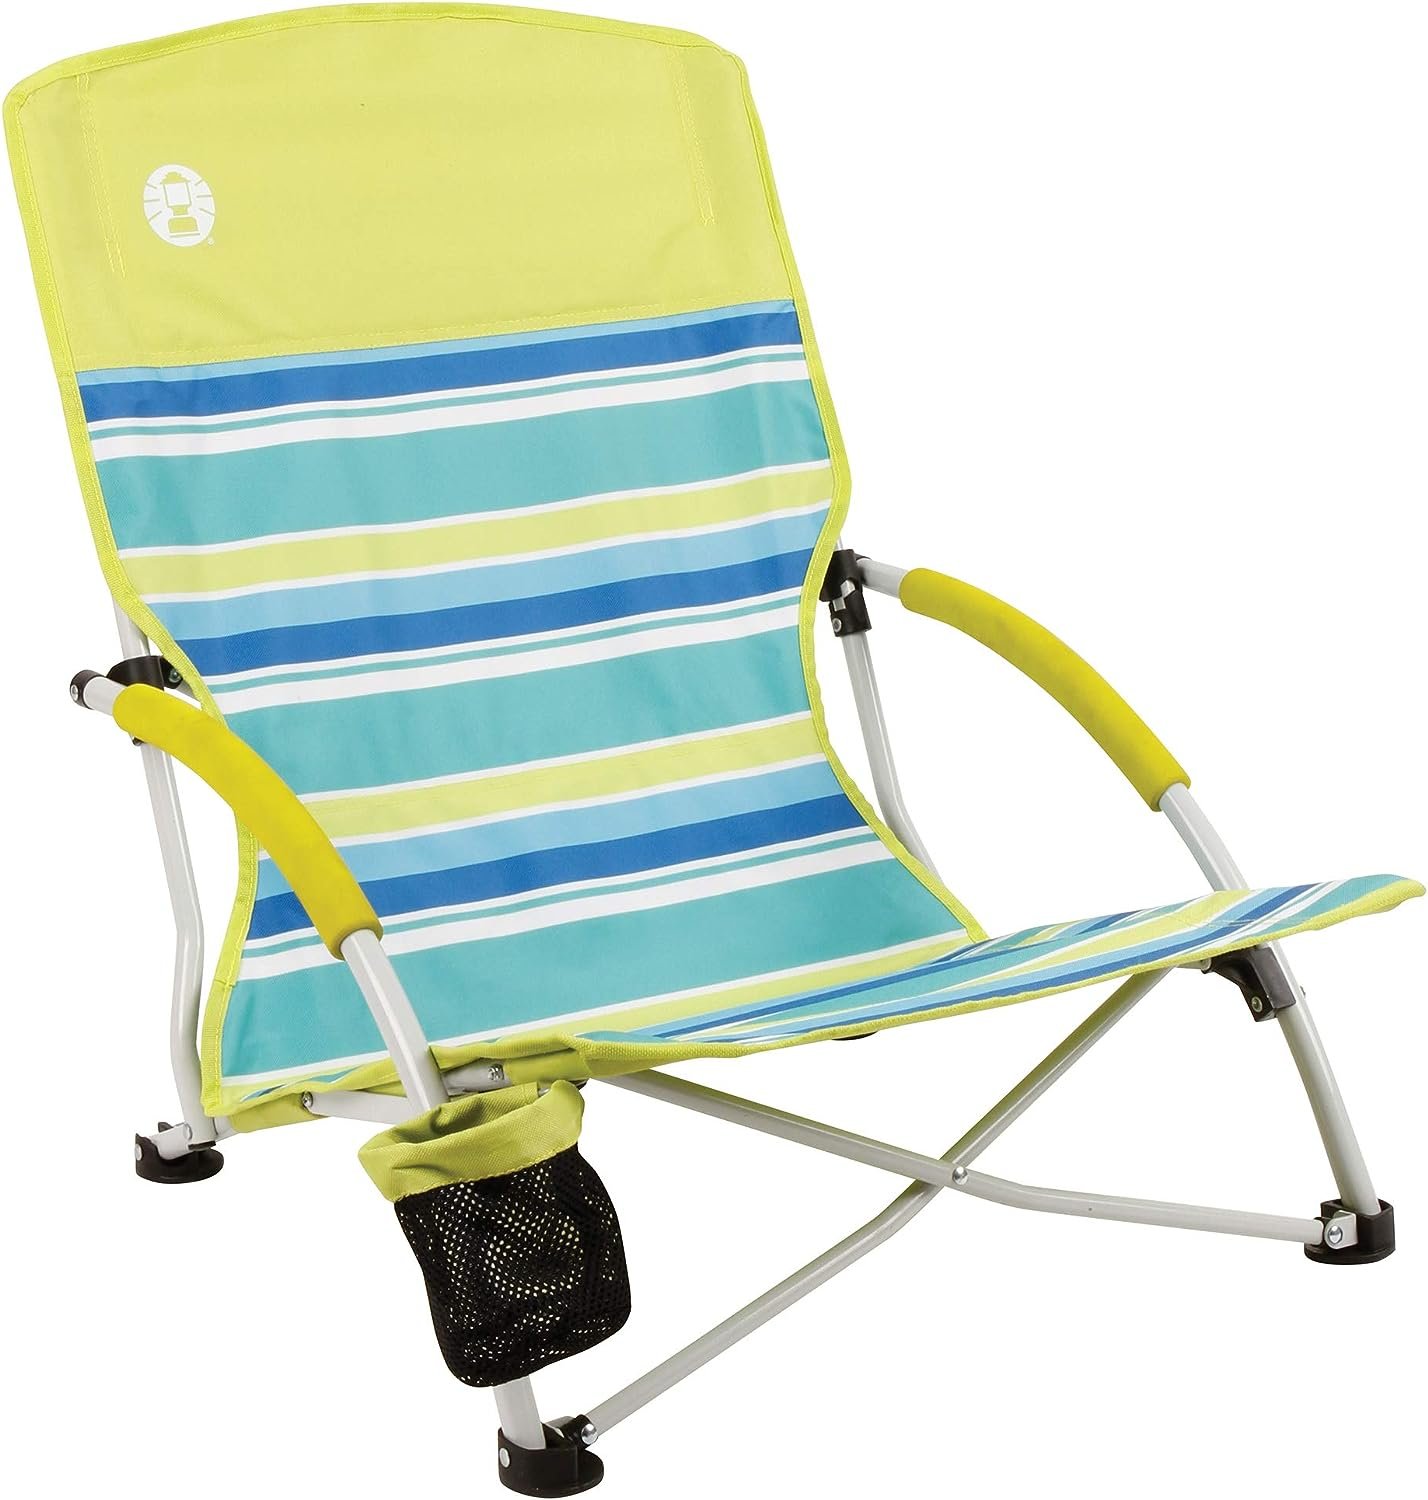 Coleman Utopia Breeze Beach Chair Review